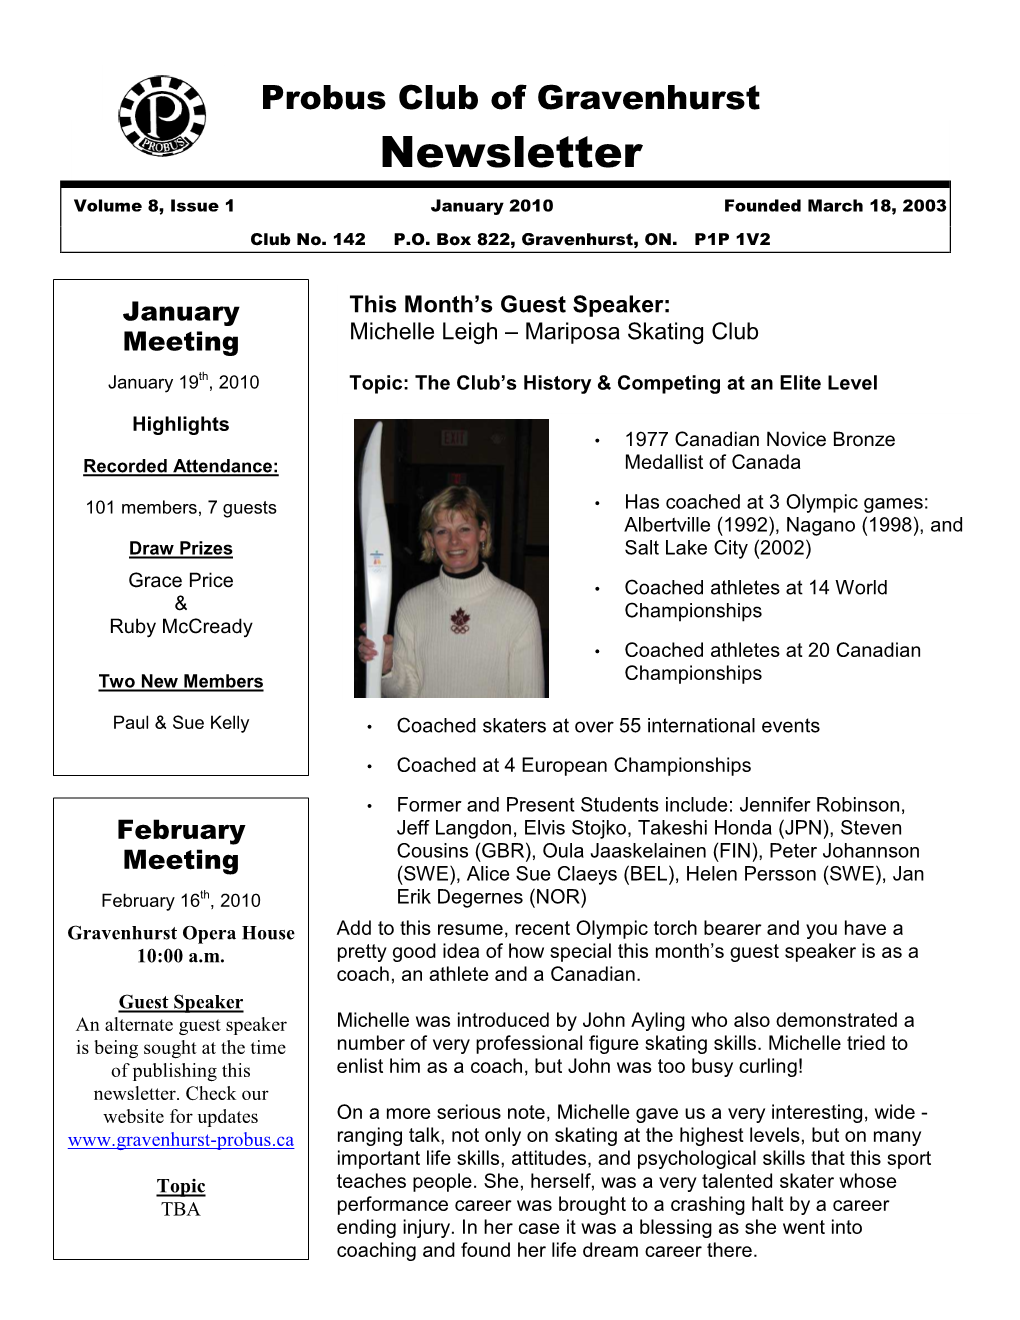 Probus Newsletter-January 2010